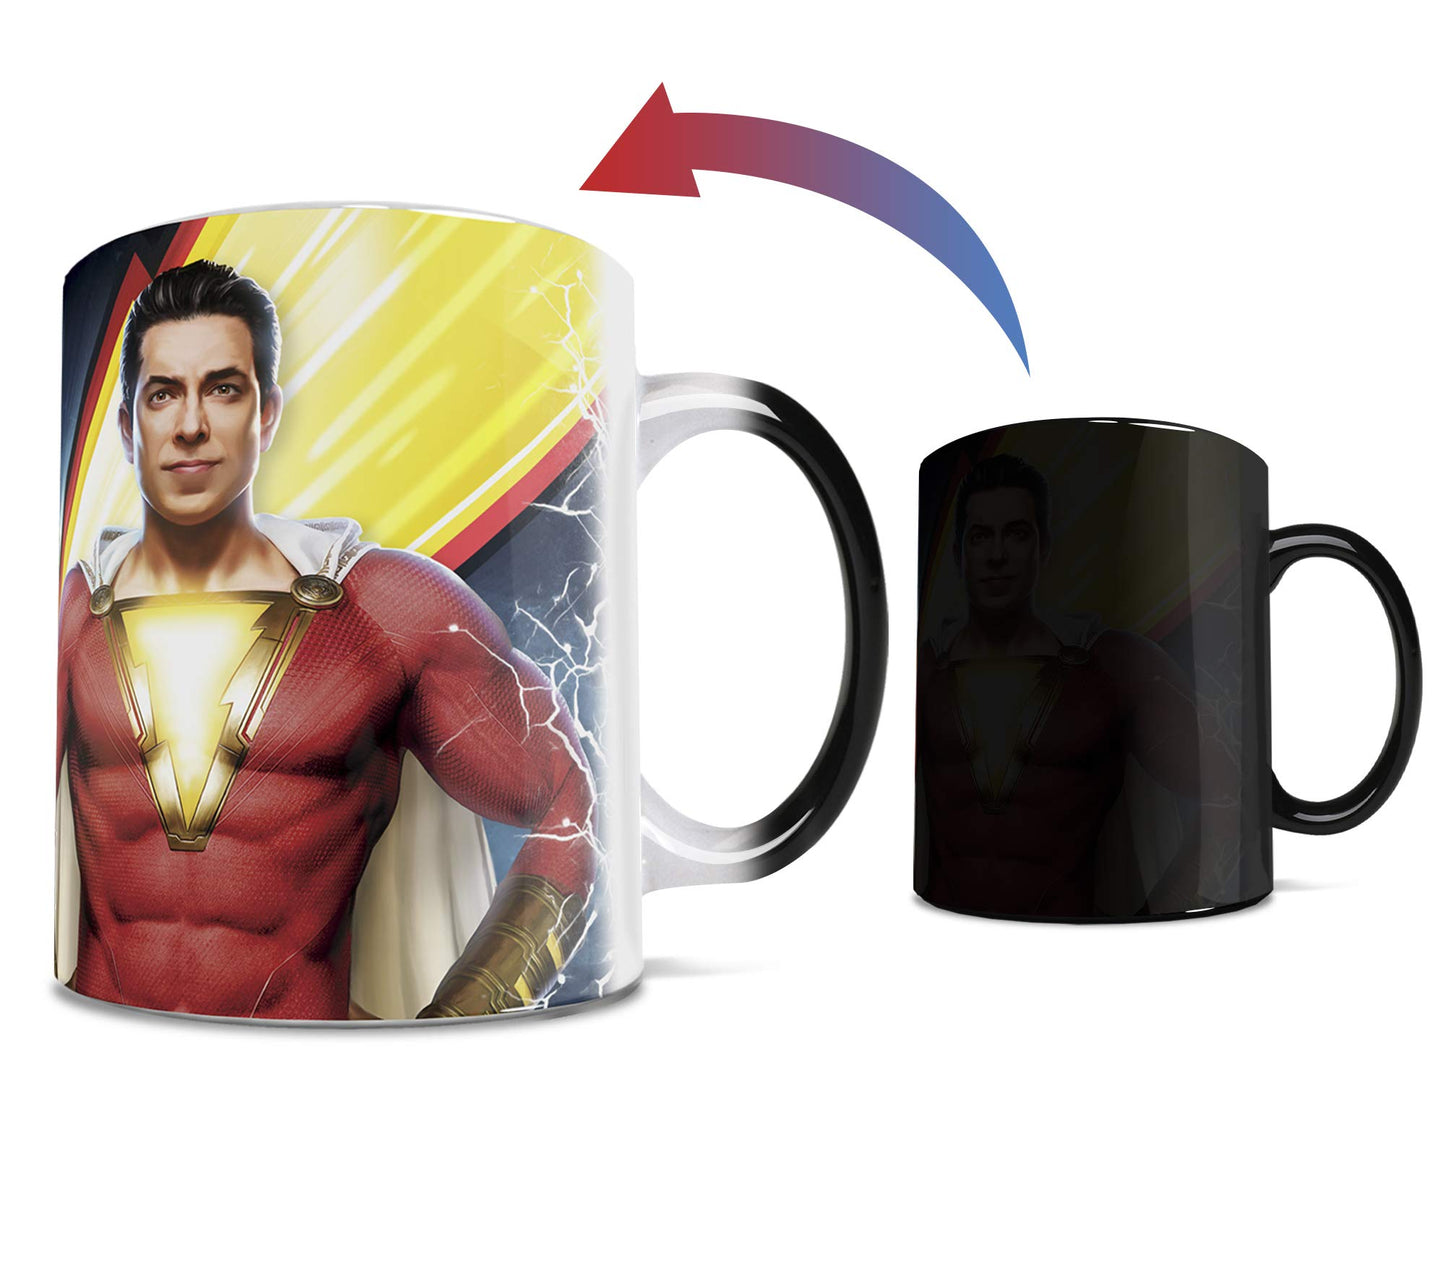 DC Comics - Shazam - One 11 oz Morphing Mugs Color Changing Heat Sensitive Ceramic Mug – Image Revealed When HOT Liquid Is Added!